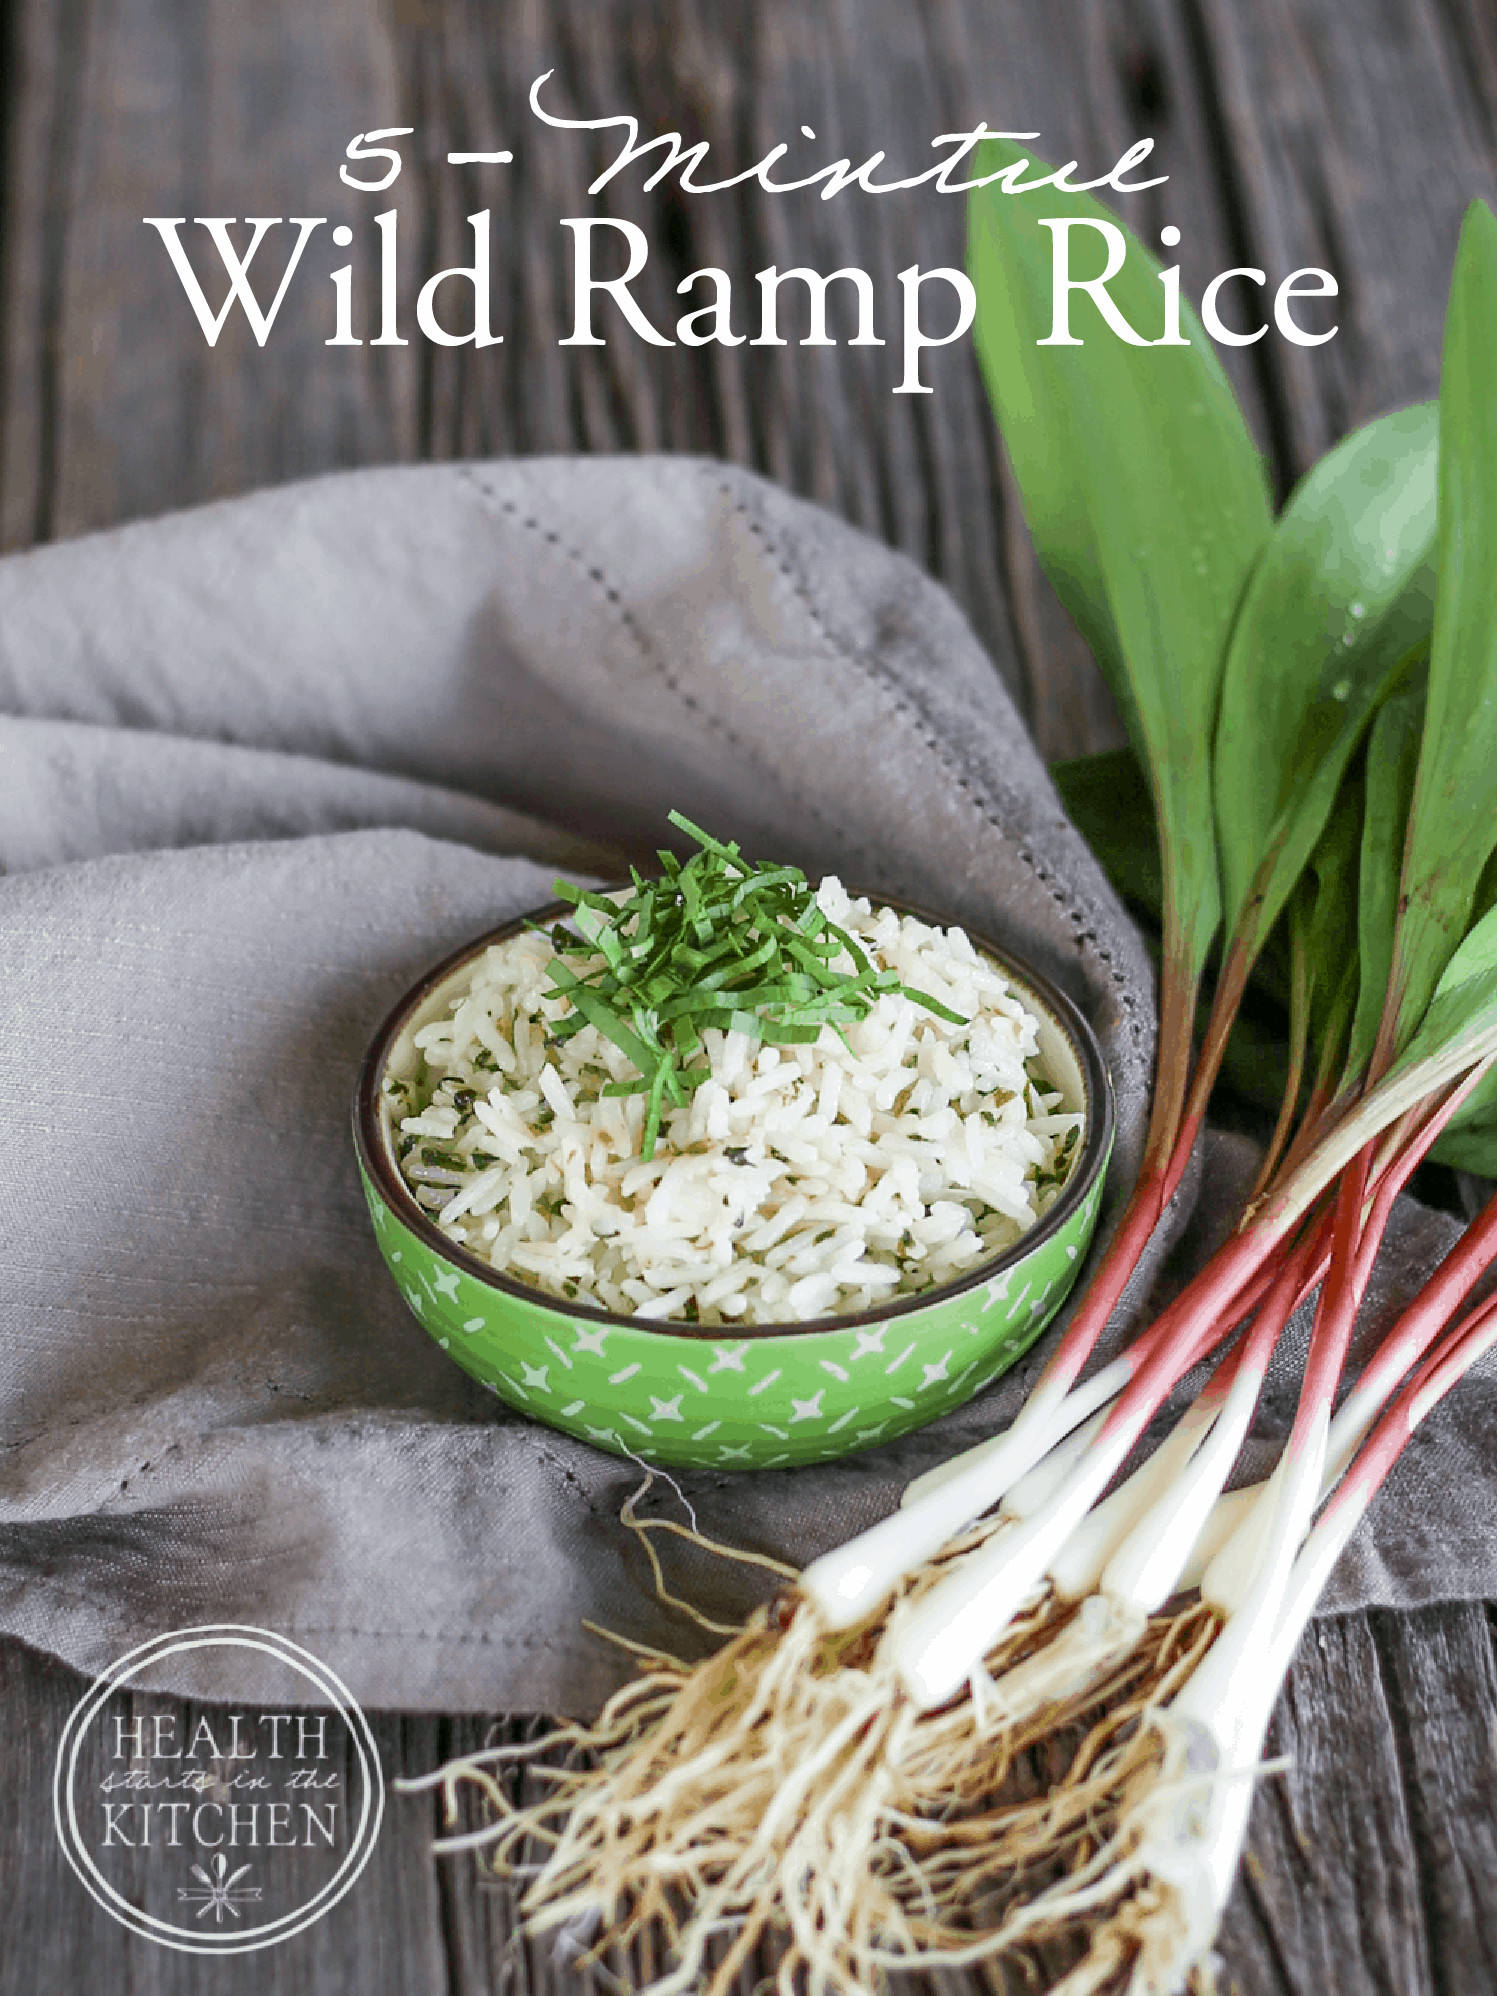 Pressure Cooker Wild Rice
 5 Minute Pressure Cooker Wild Ramp Rice Health Starts